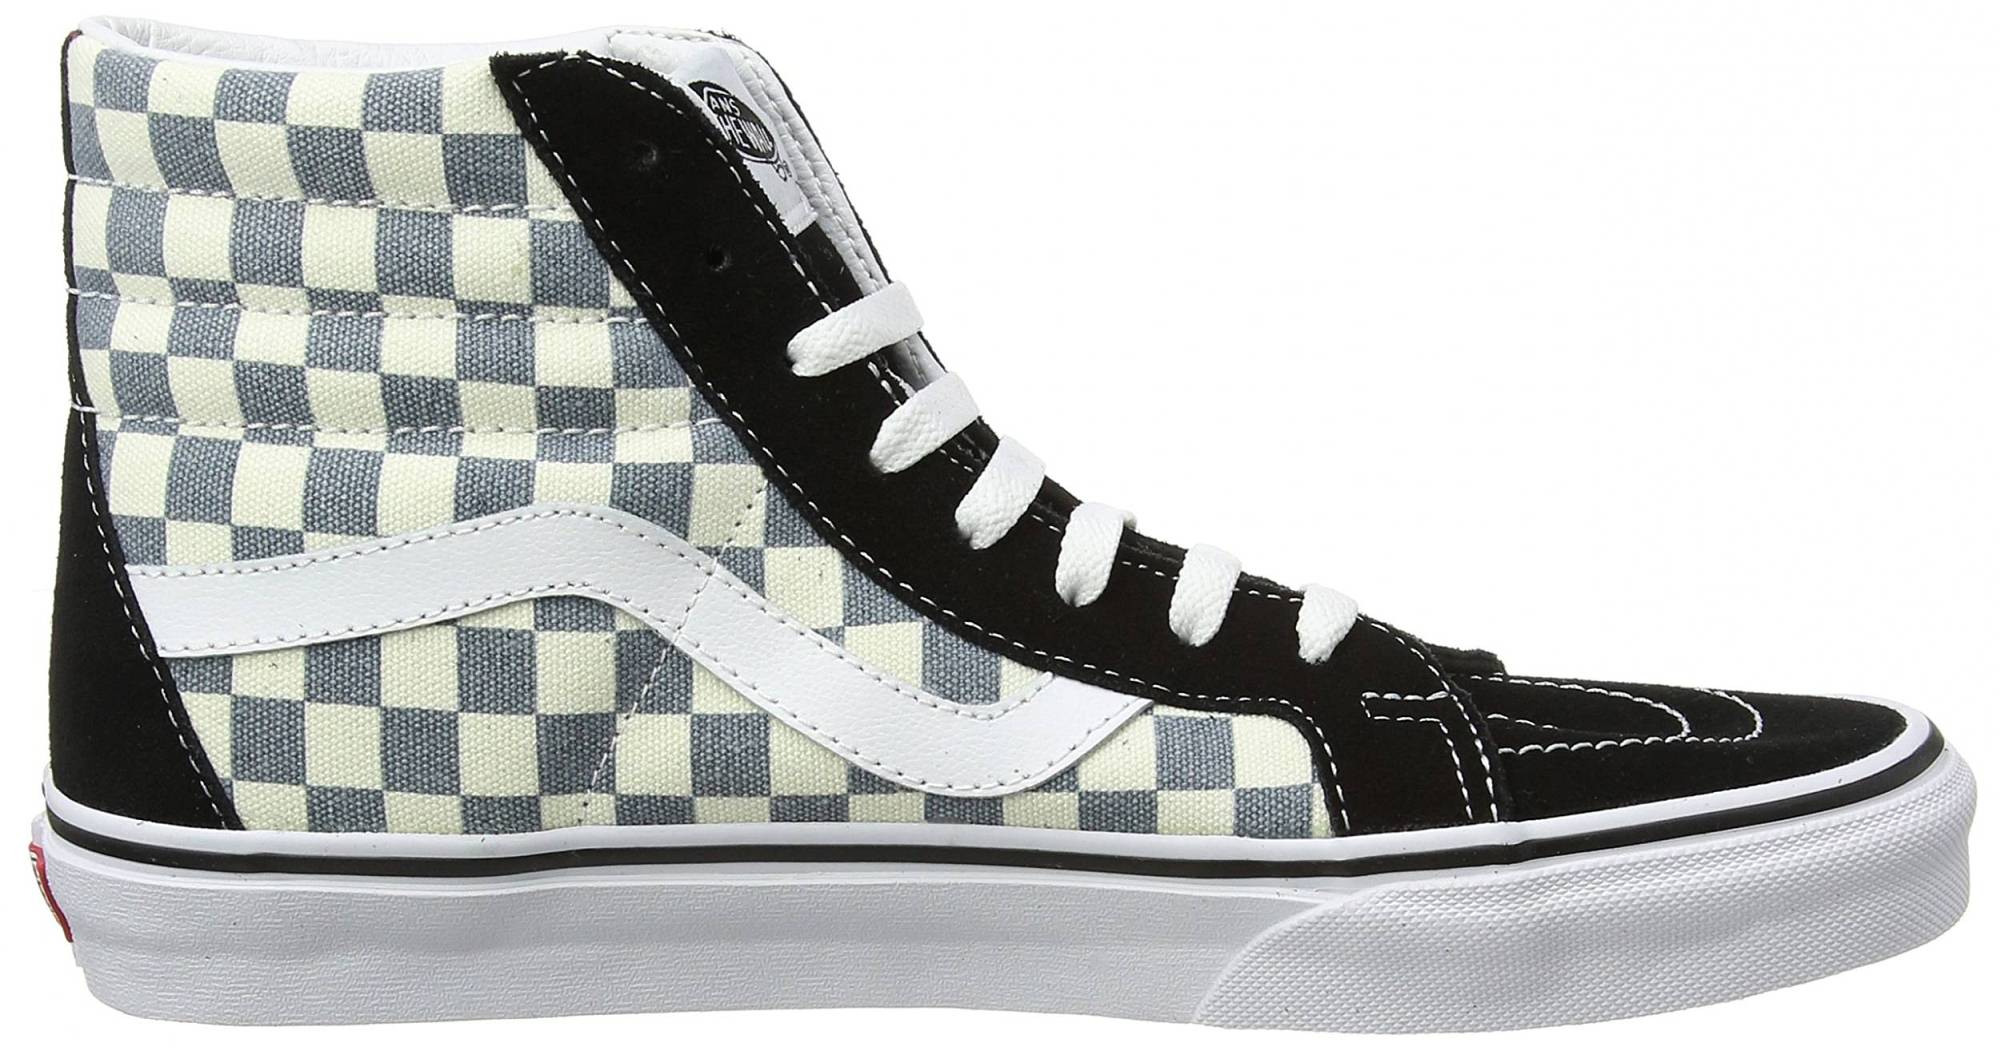 Vans Checkerboard SK8-Hi Reissue – Shoes Reviews & Reasons To Buy